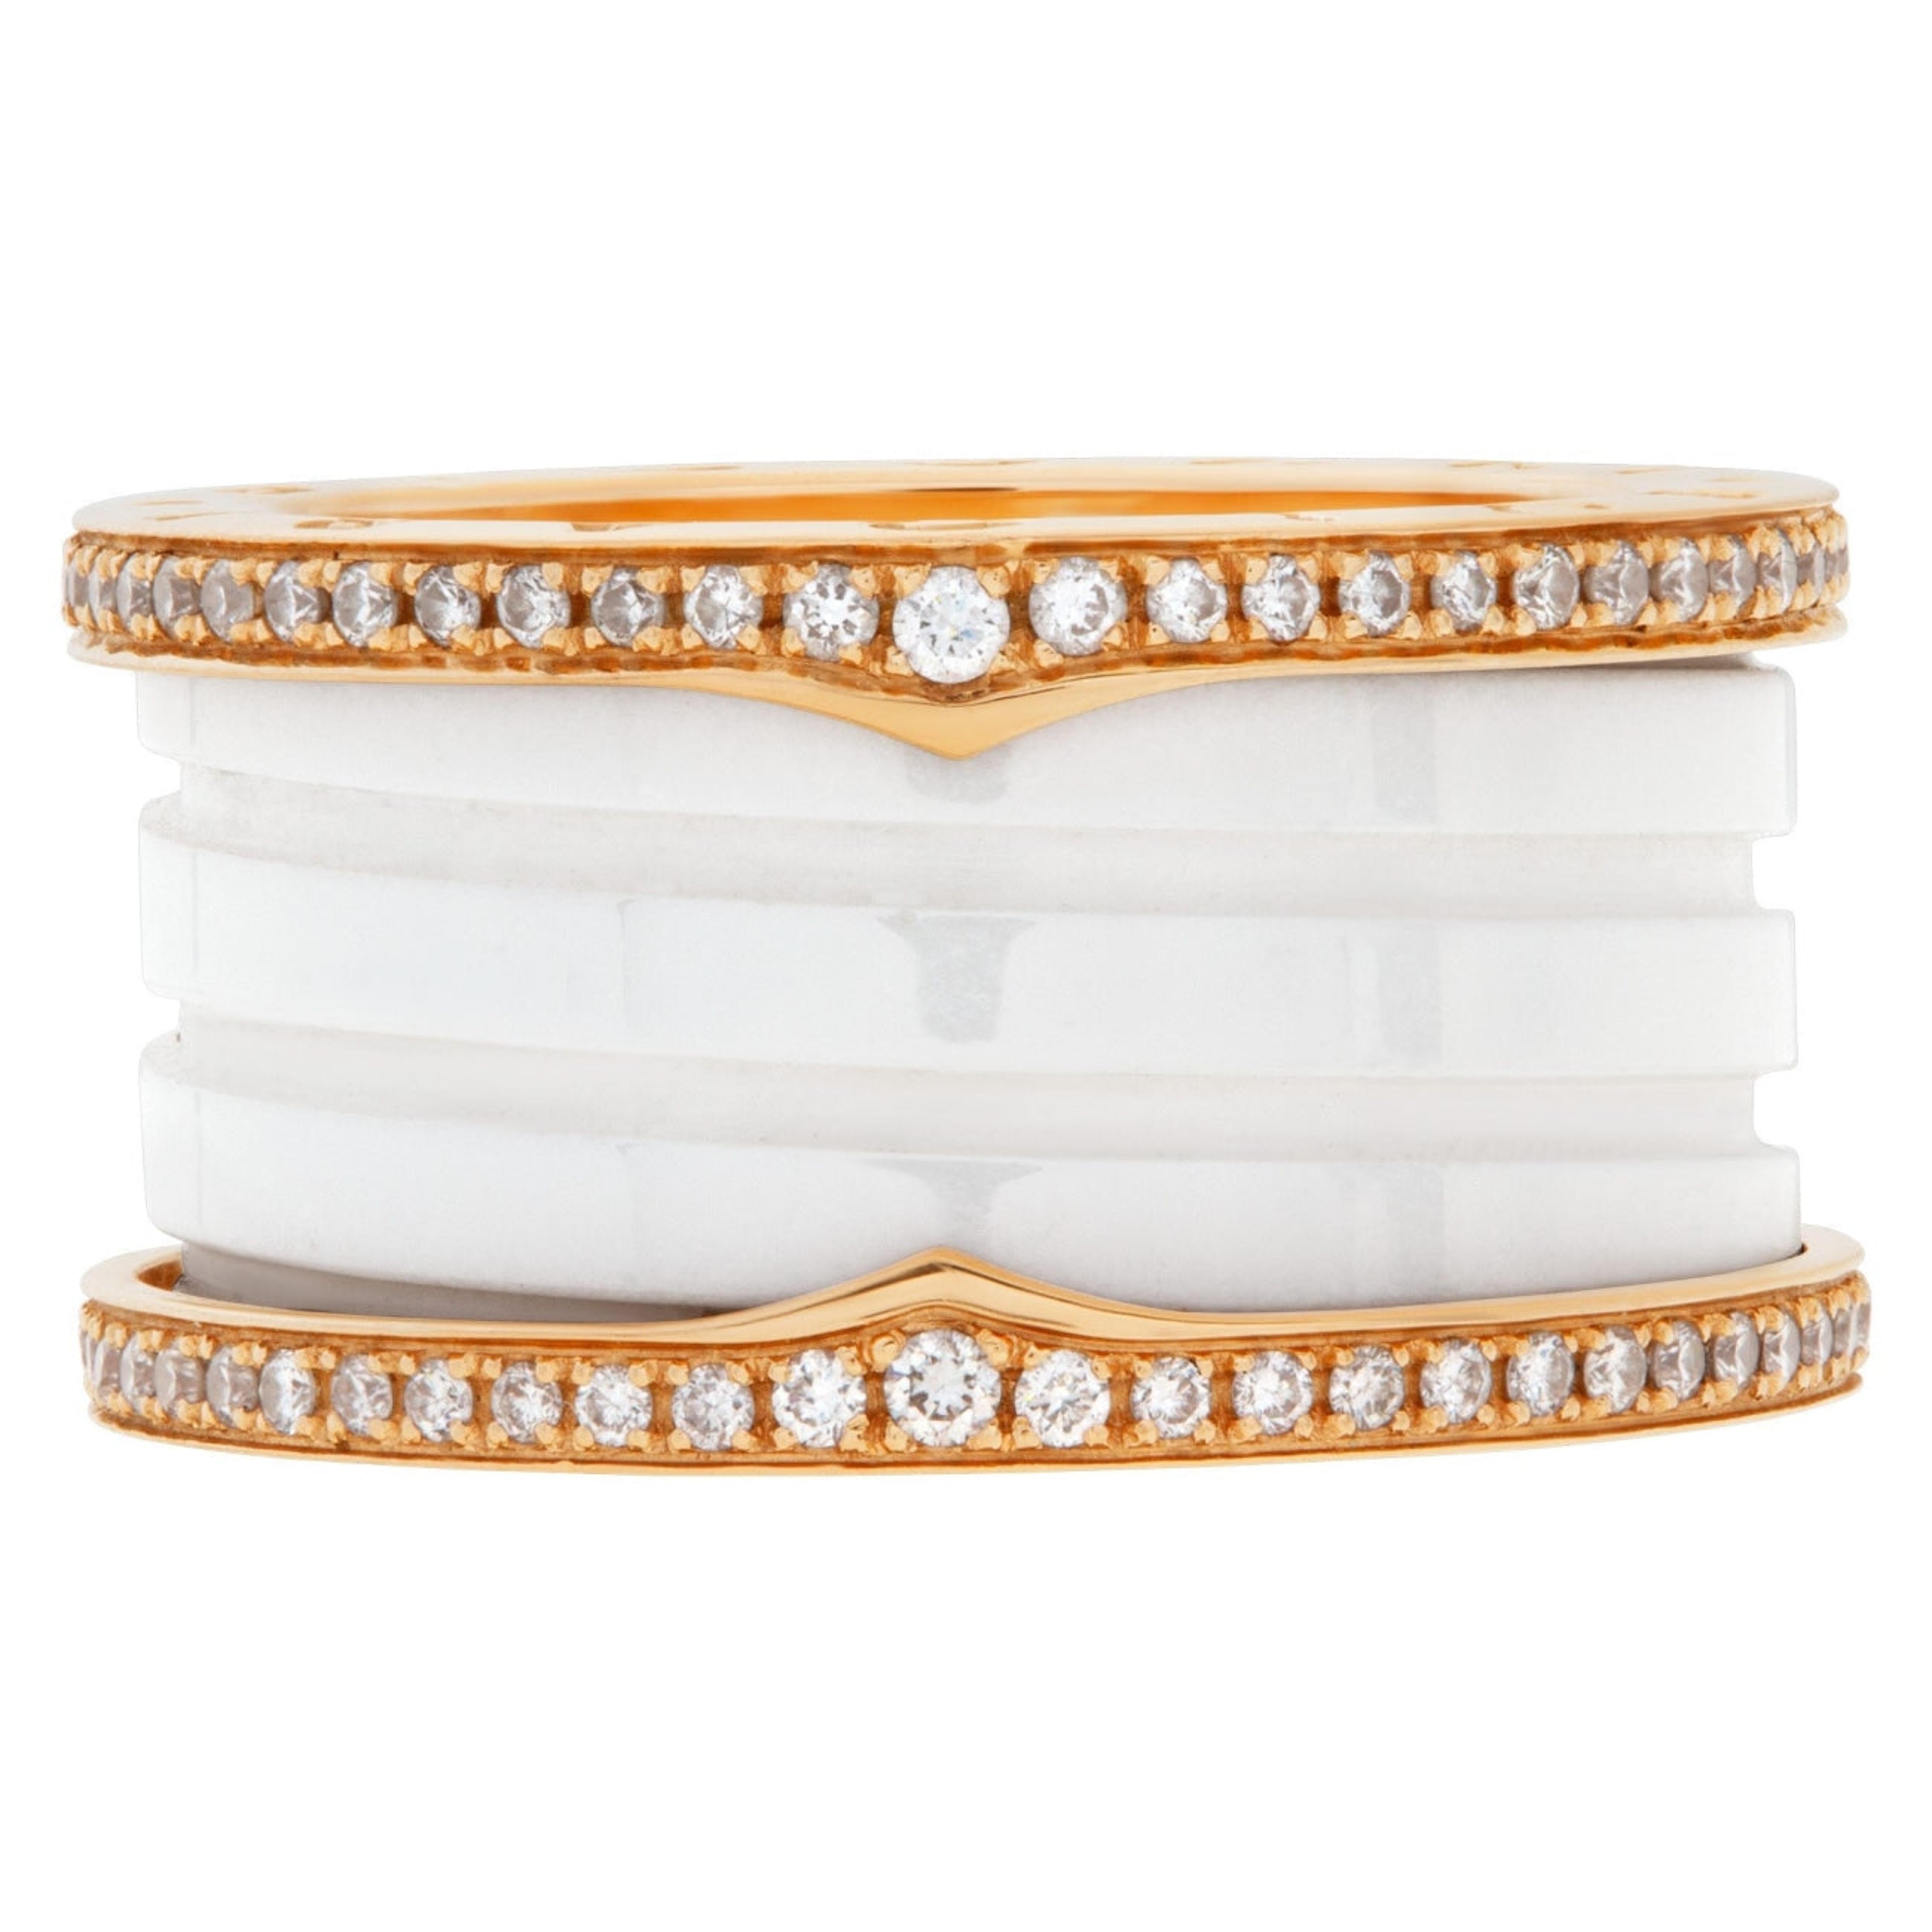 Bvlgari B.zero1 ring in 18k rose gold with diamonds & white ceramic.
Size 51
12mm width.

Ref:349966